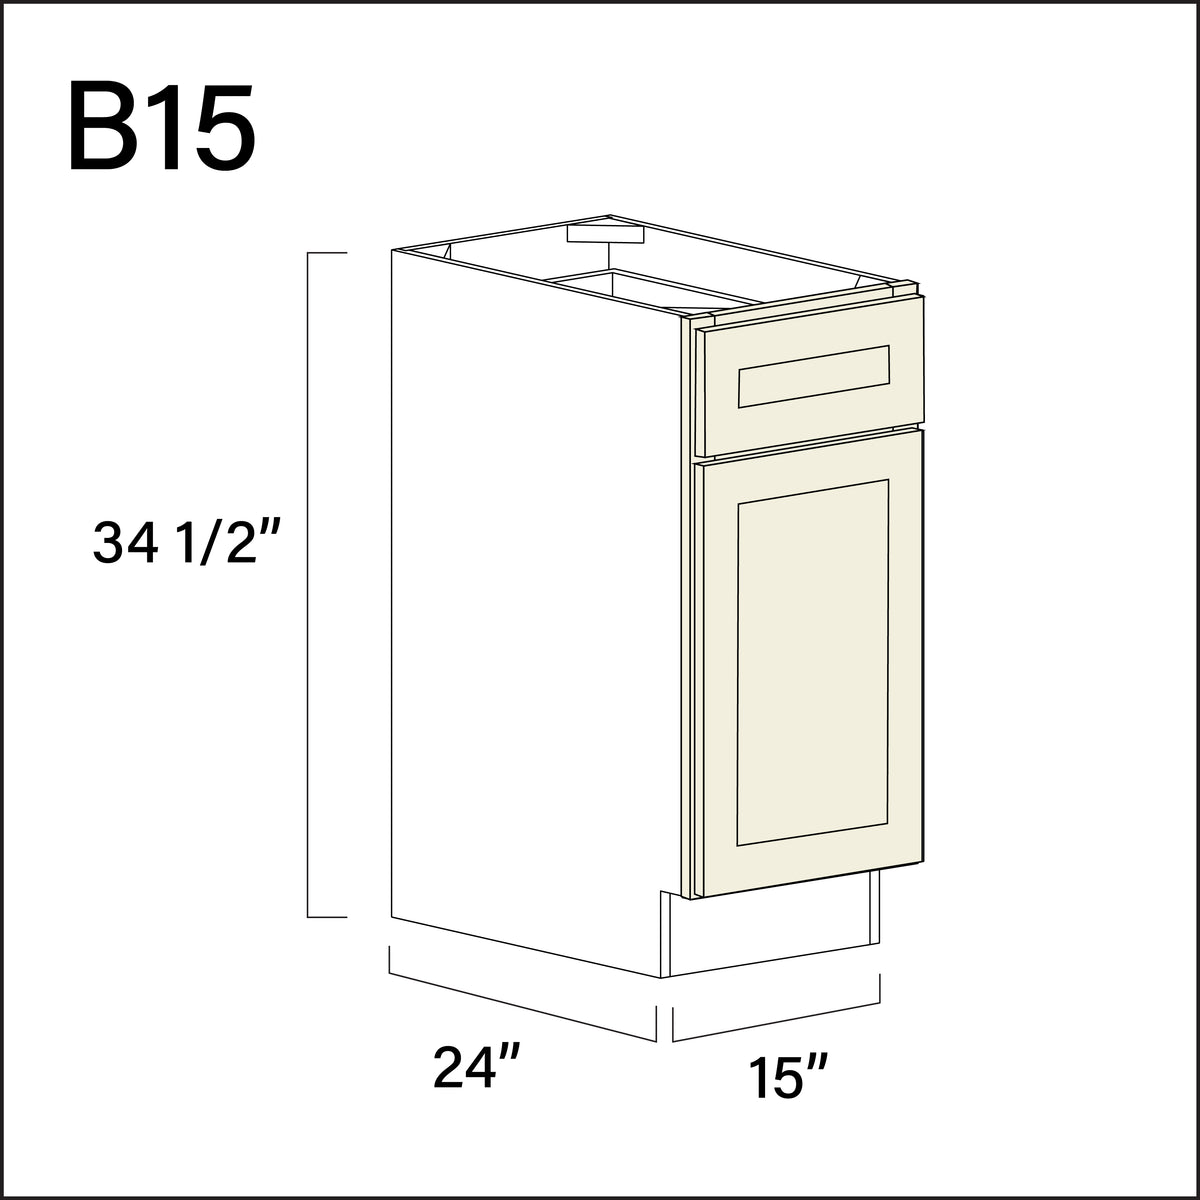 Alton Ivory White 1 Drawer 1 Door Kitchen Base Cabinet - 15" W x 34.5" H x 24" D